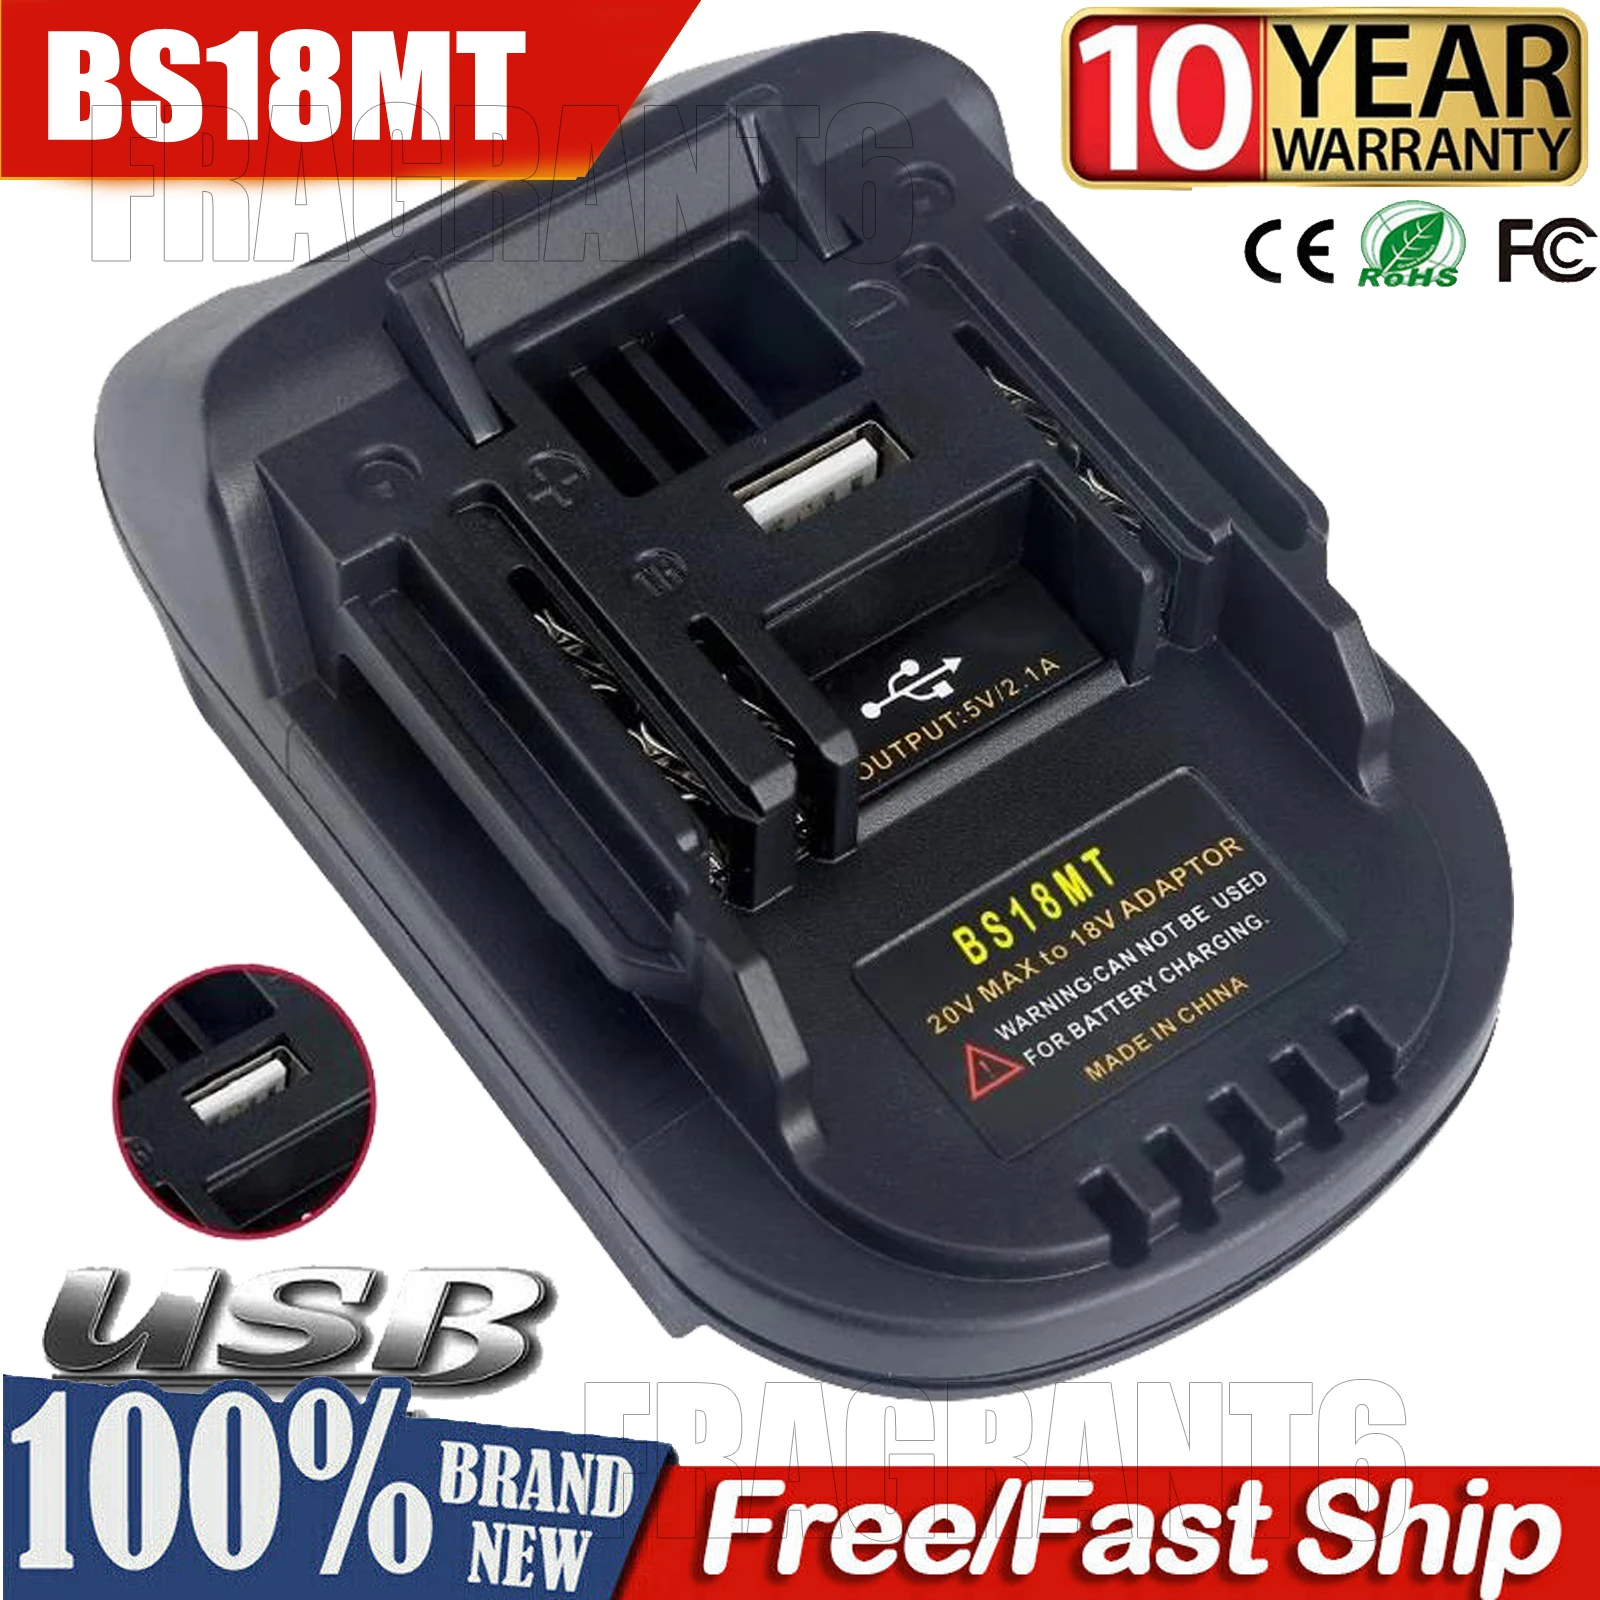 BS18MT Battery Adapter Converter USB For Bosch 18V BAT619G/620 Batteries Convert For Makita BL 1860 Lithium Tools